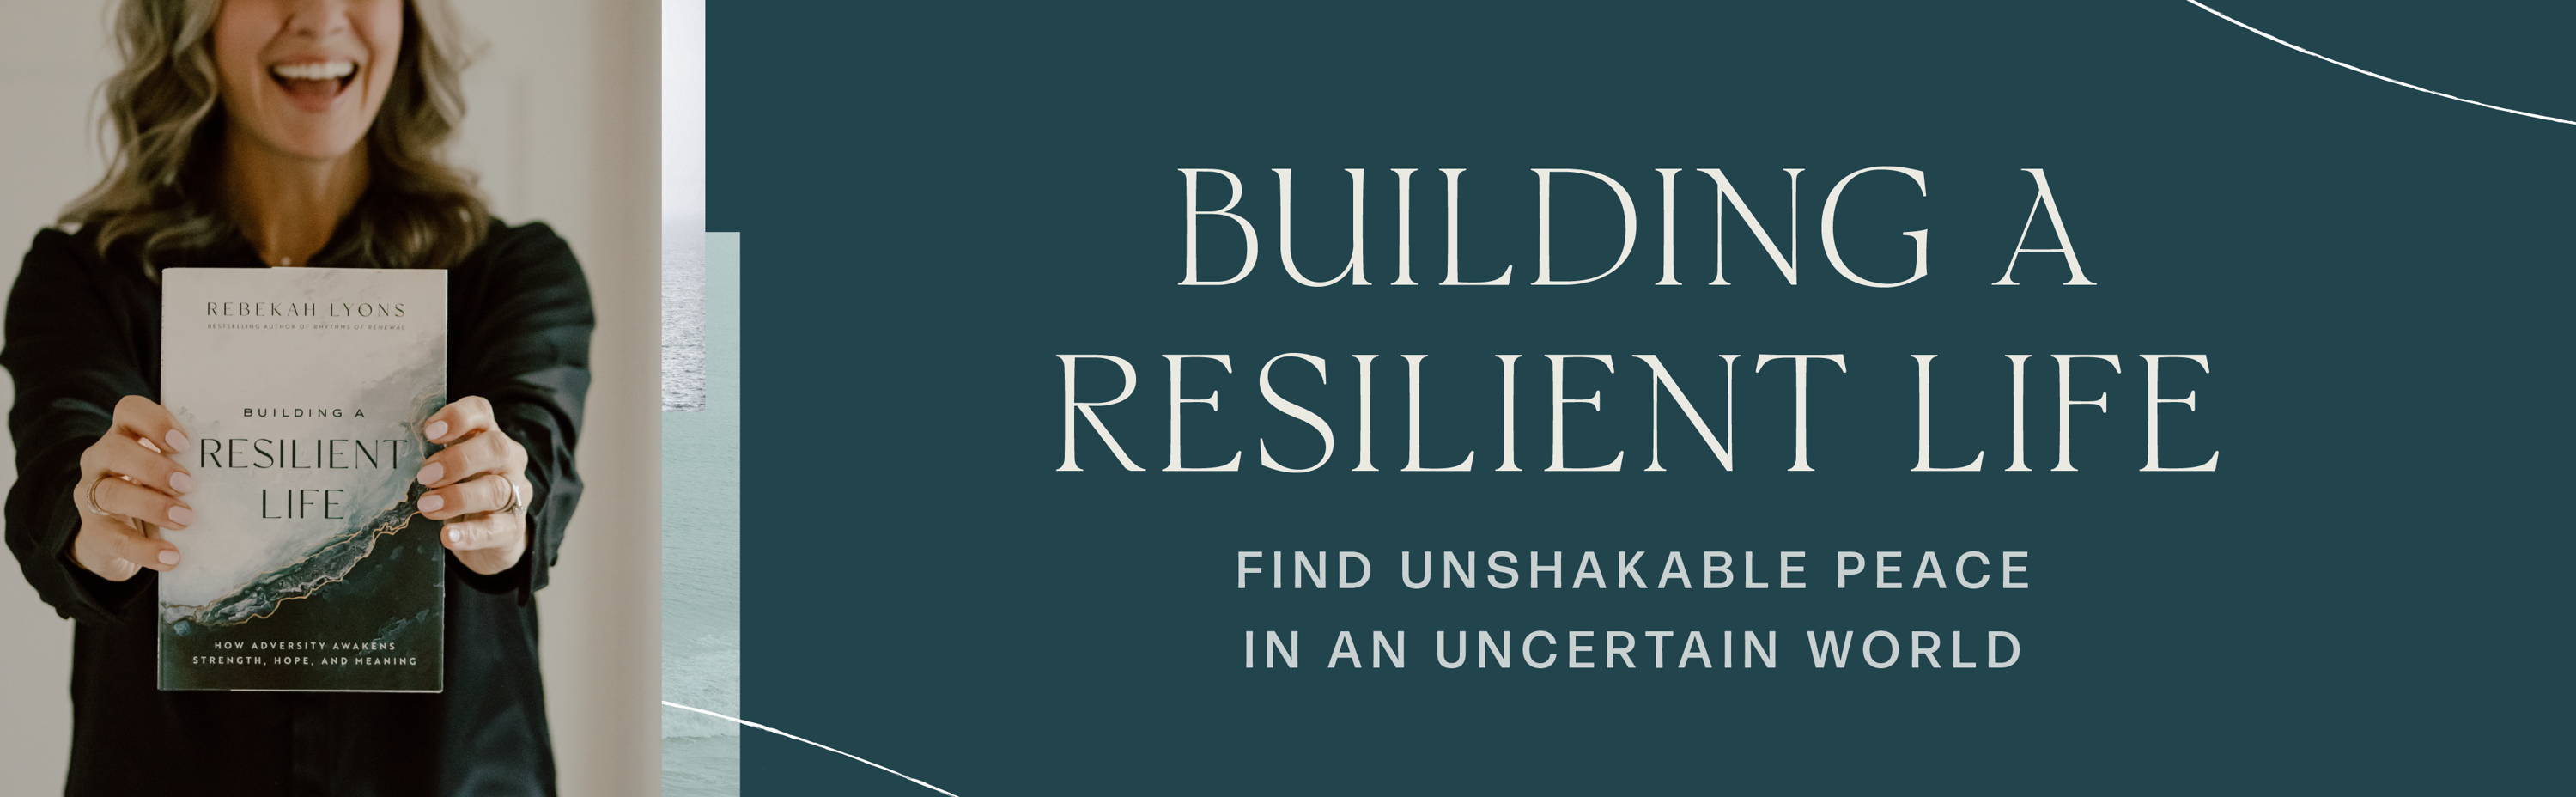 Building-a-resilient-life-rebekah-lyons-video-bible-study-resources 